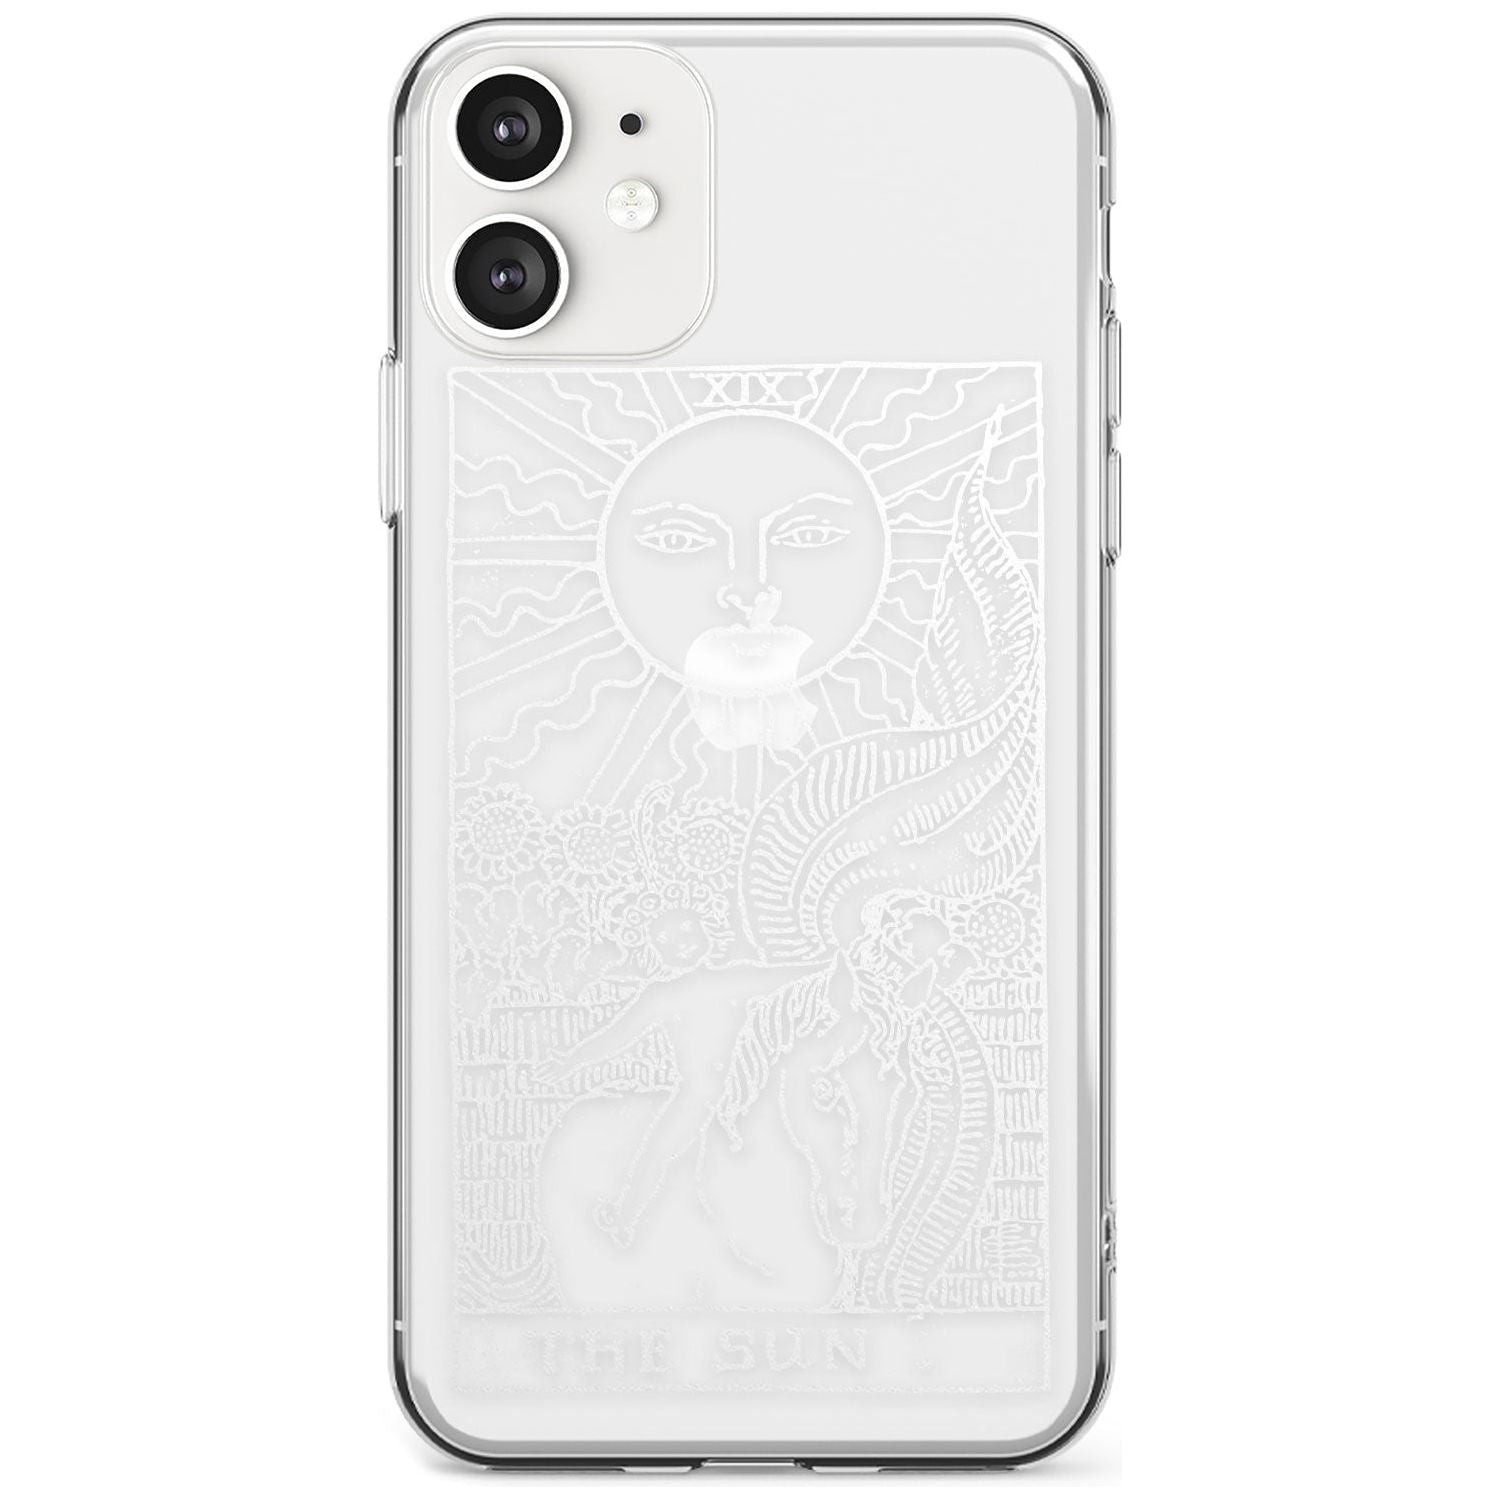 The Sun Tarot Card - White Transparent Black Impact Phone Case for iPhone 11